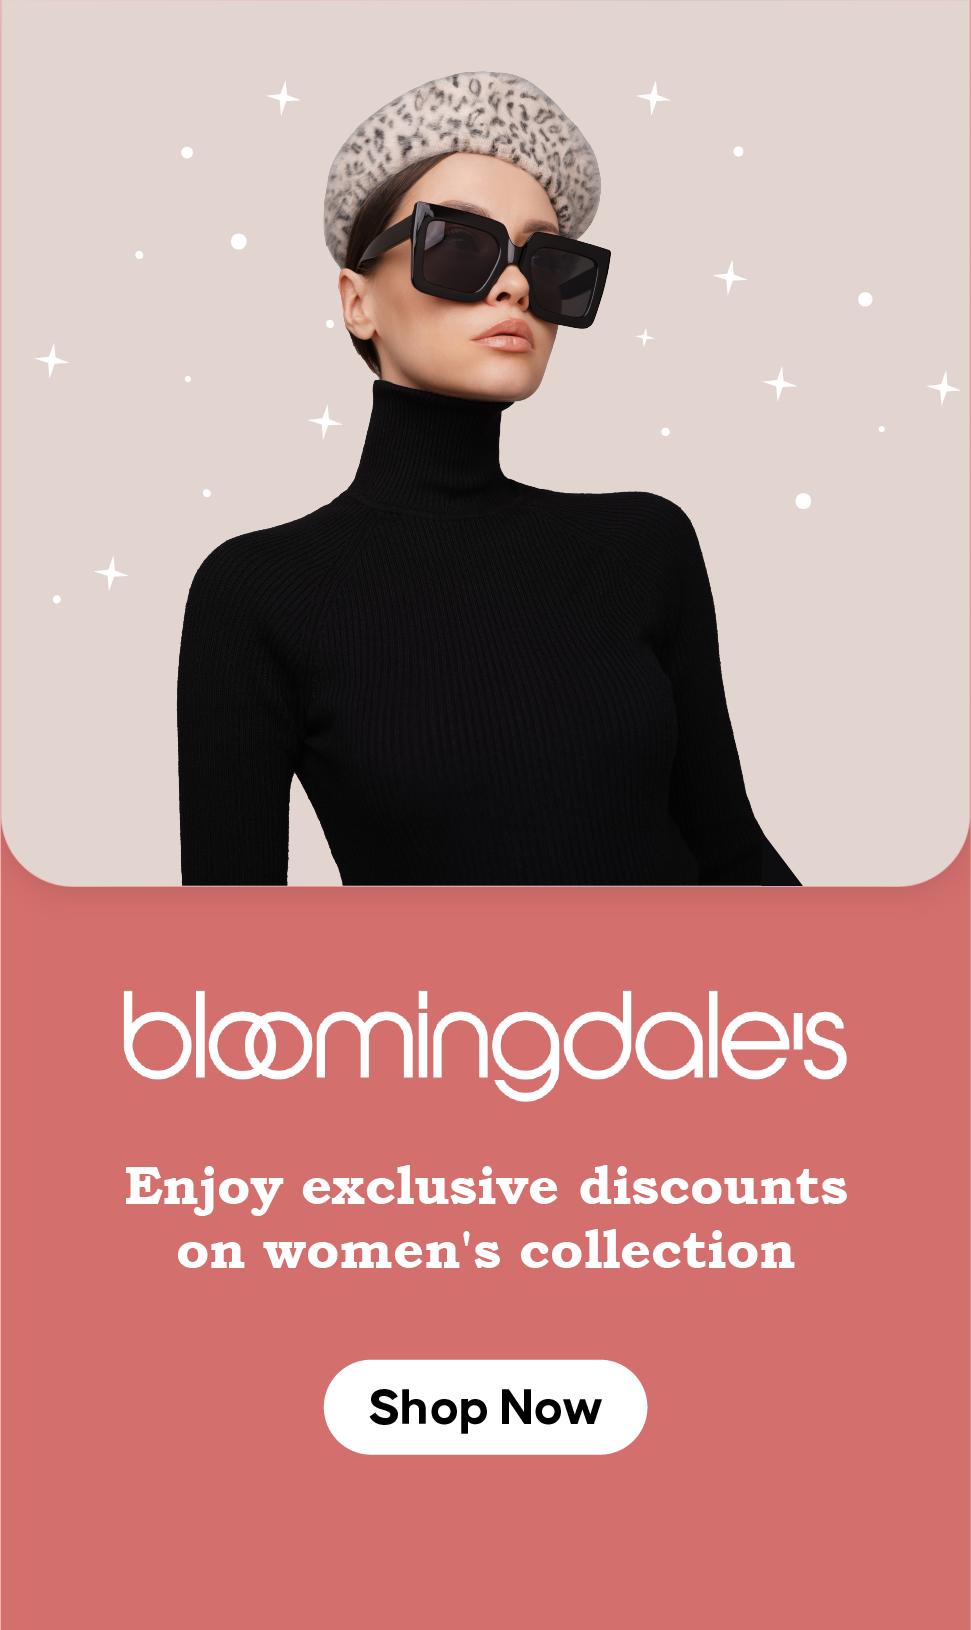 bloomingdales latest deals